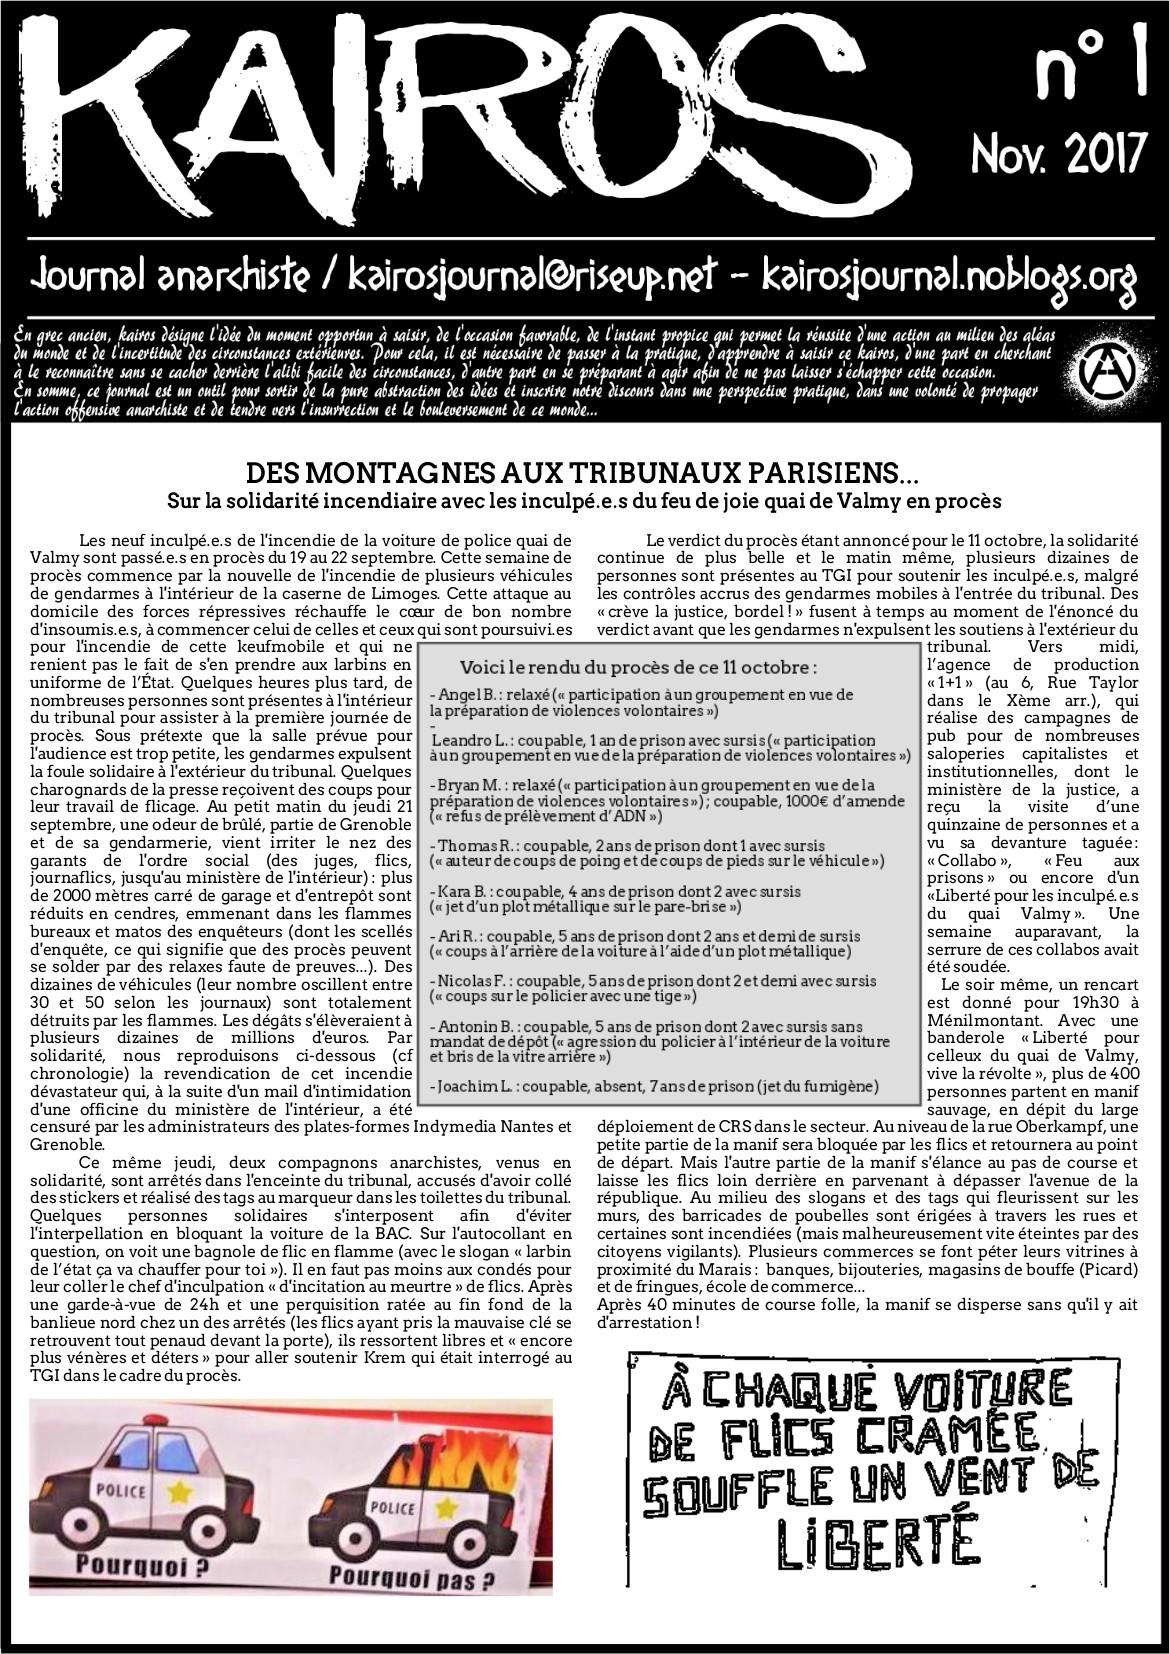 f-u-francia-uscito-n-1-di-kairos-giornale-anarchic-1.jpg